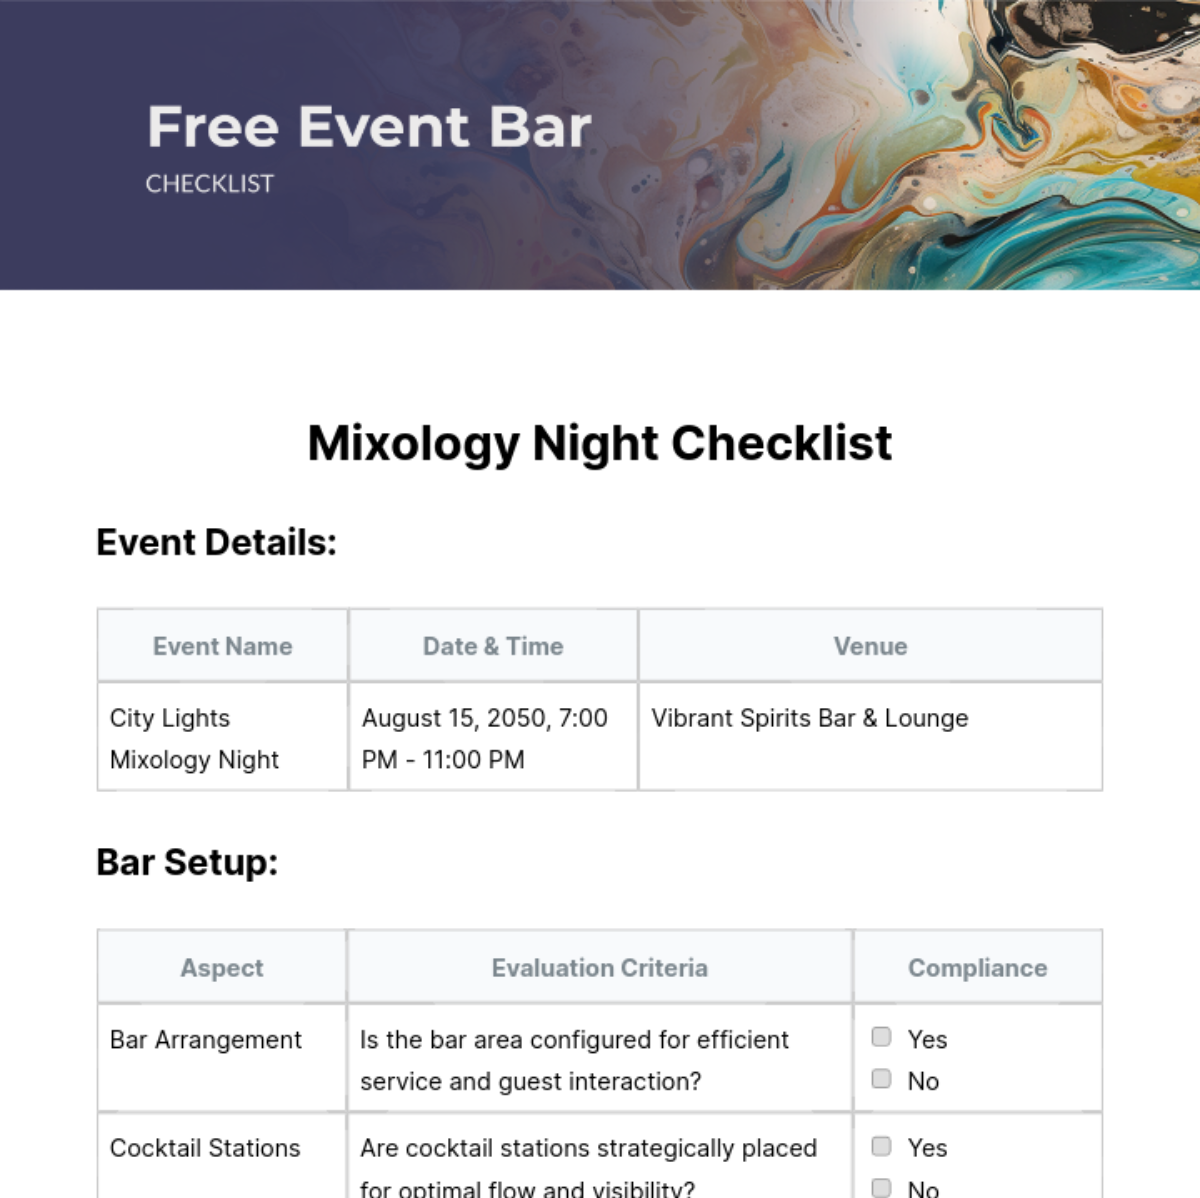 Free Event Bar Checklist Template